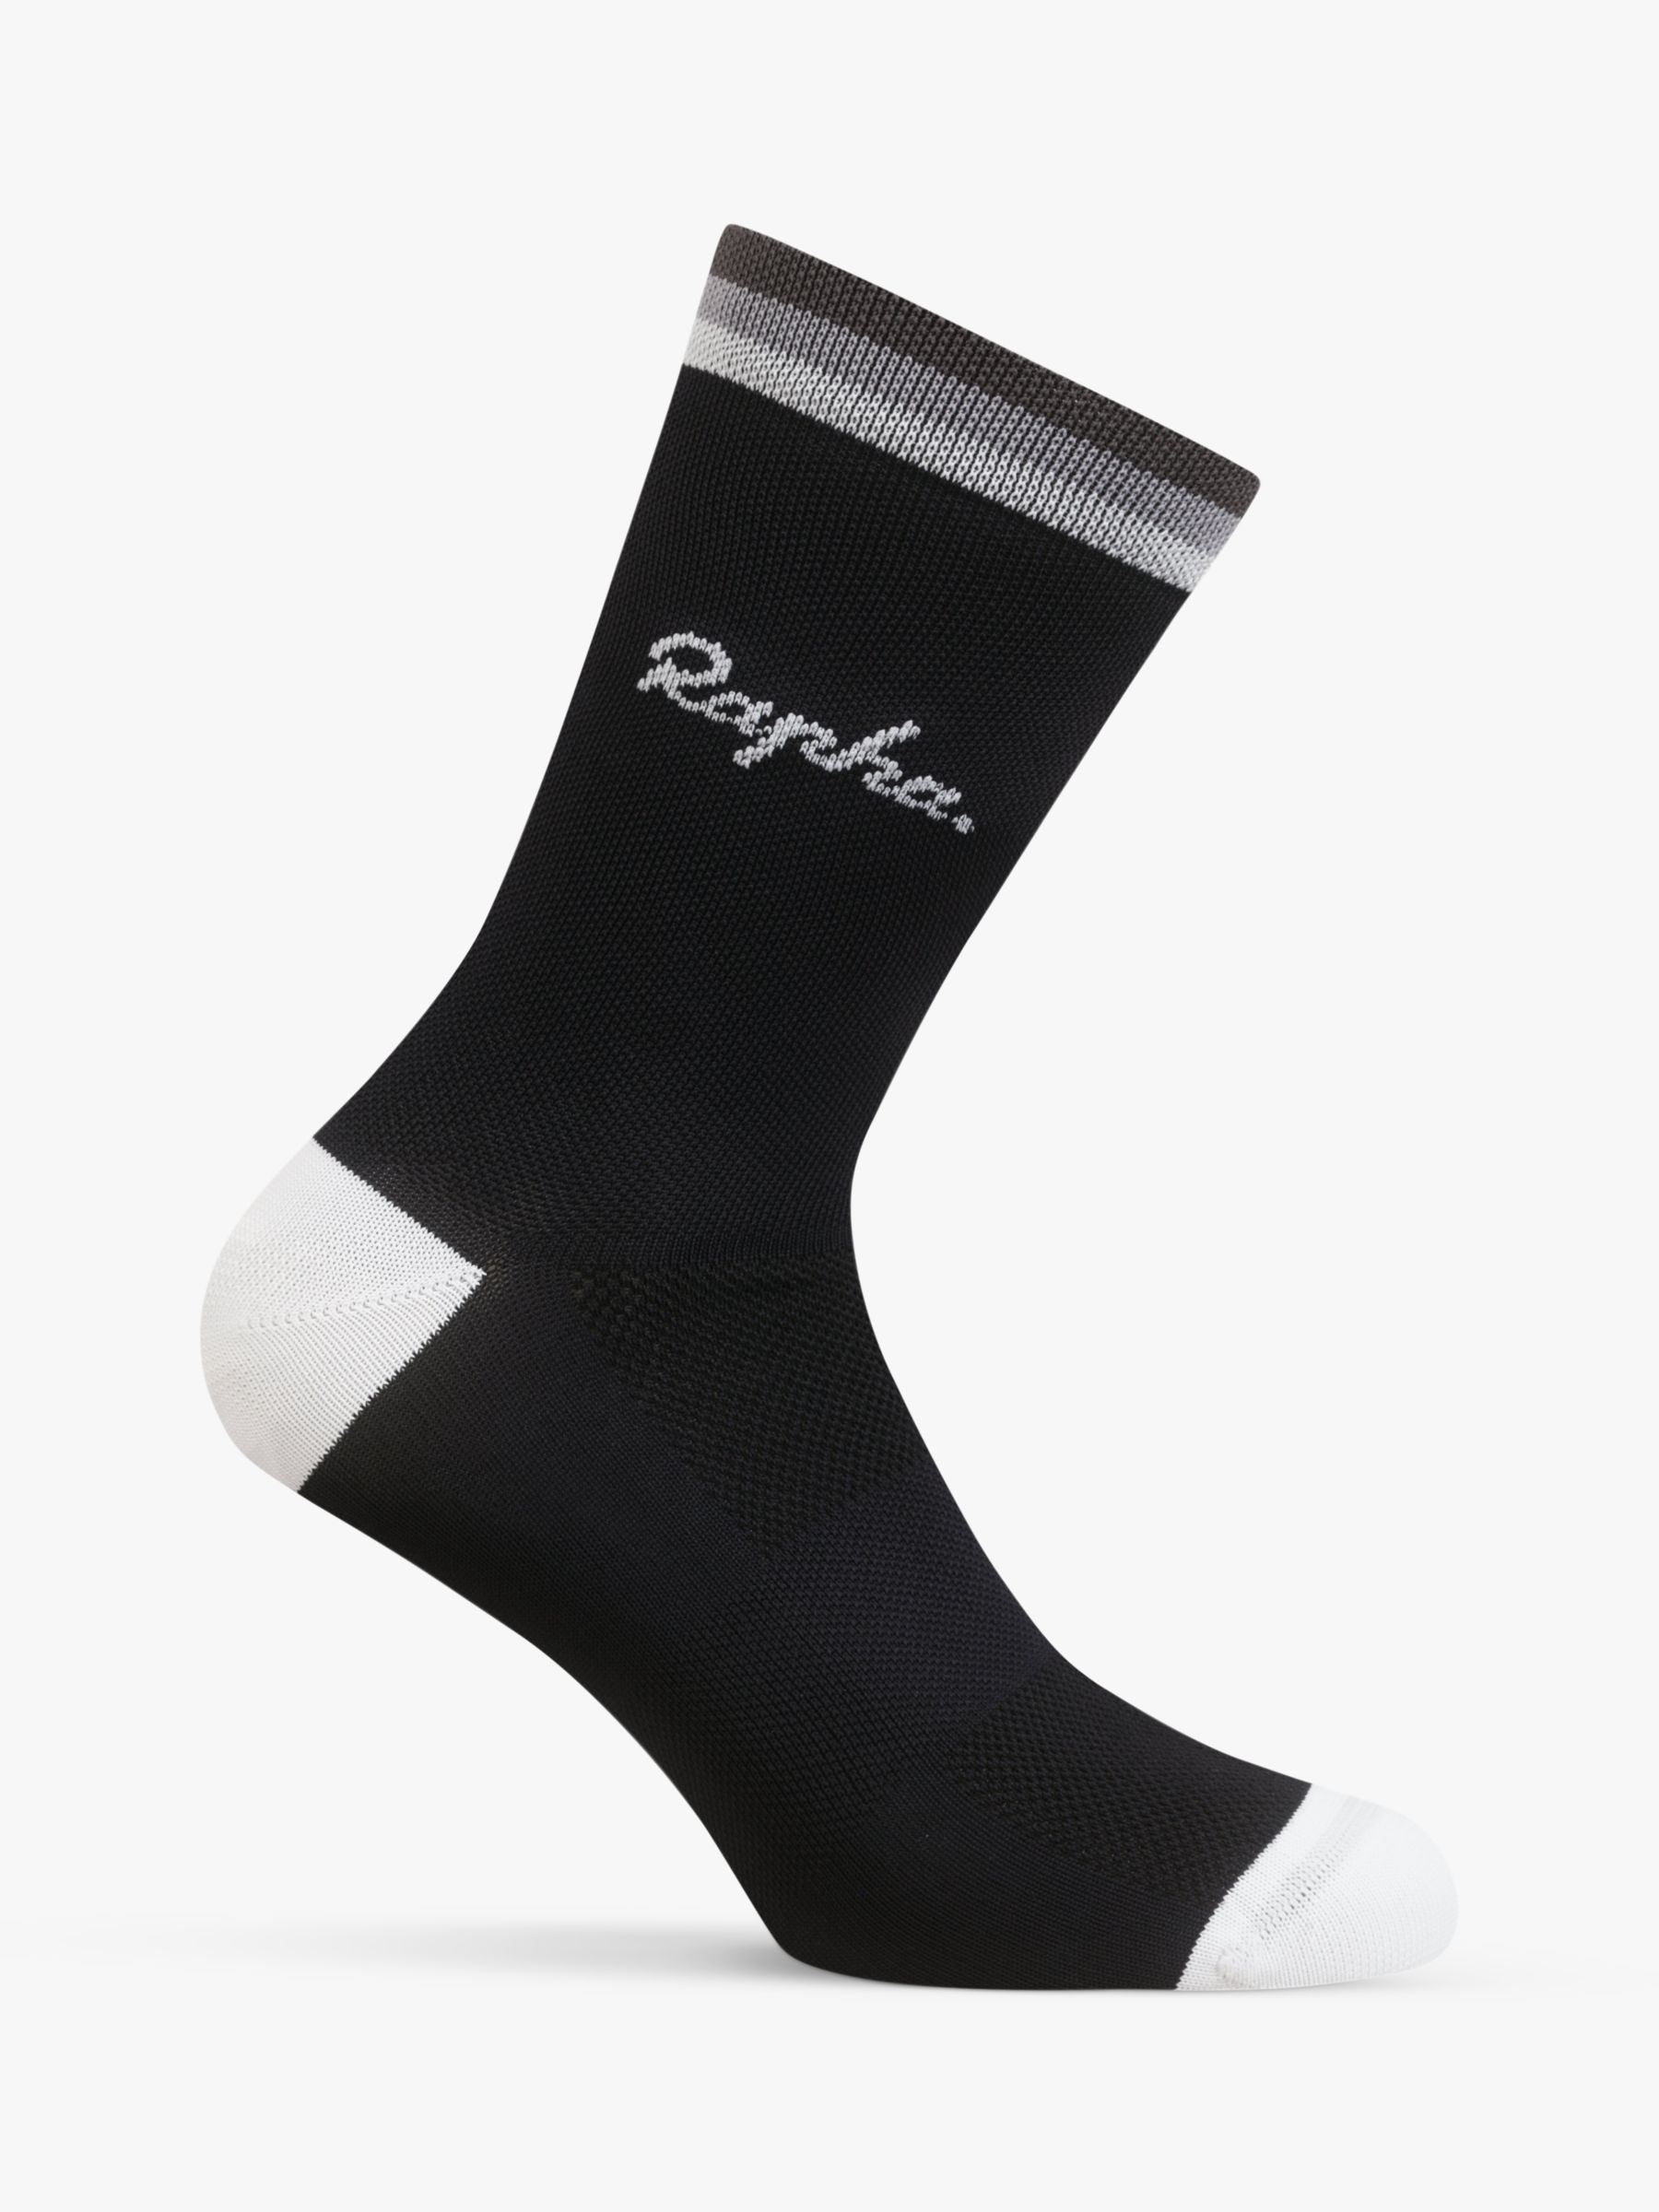 Rapha Logo Socks, Black/Grey/Carbon, S